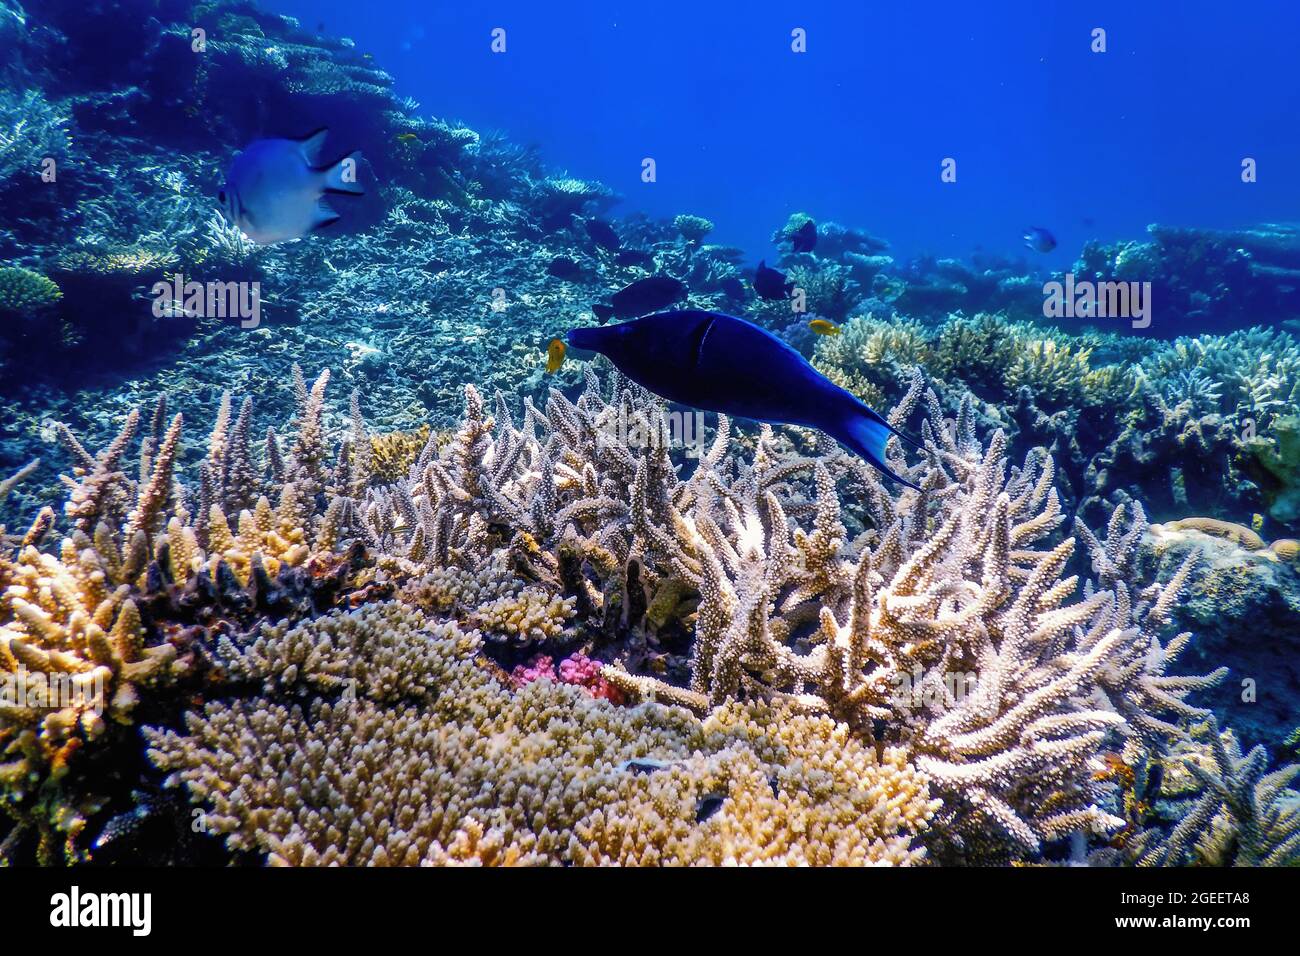 Blue Bird Wrasse (Gomphosus caeruleus) Coral fish, Tropical waters, Marine life Stock Photo